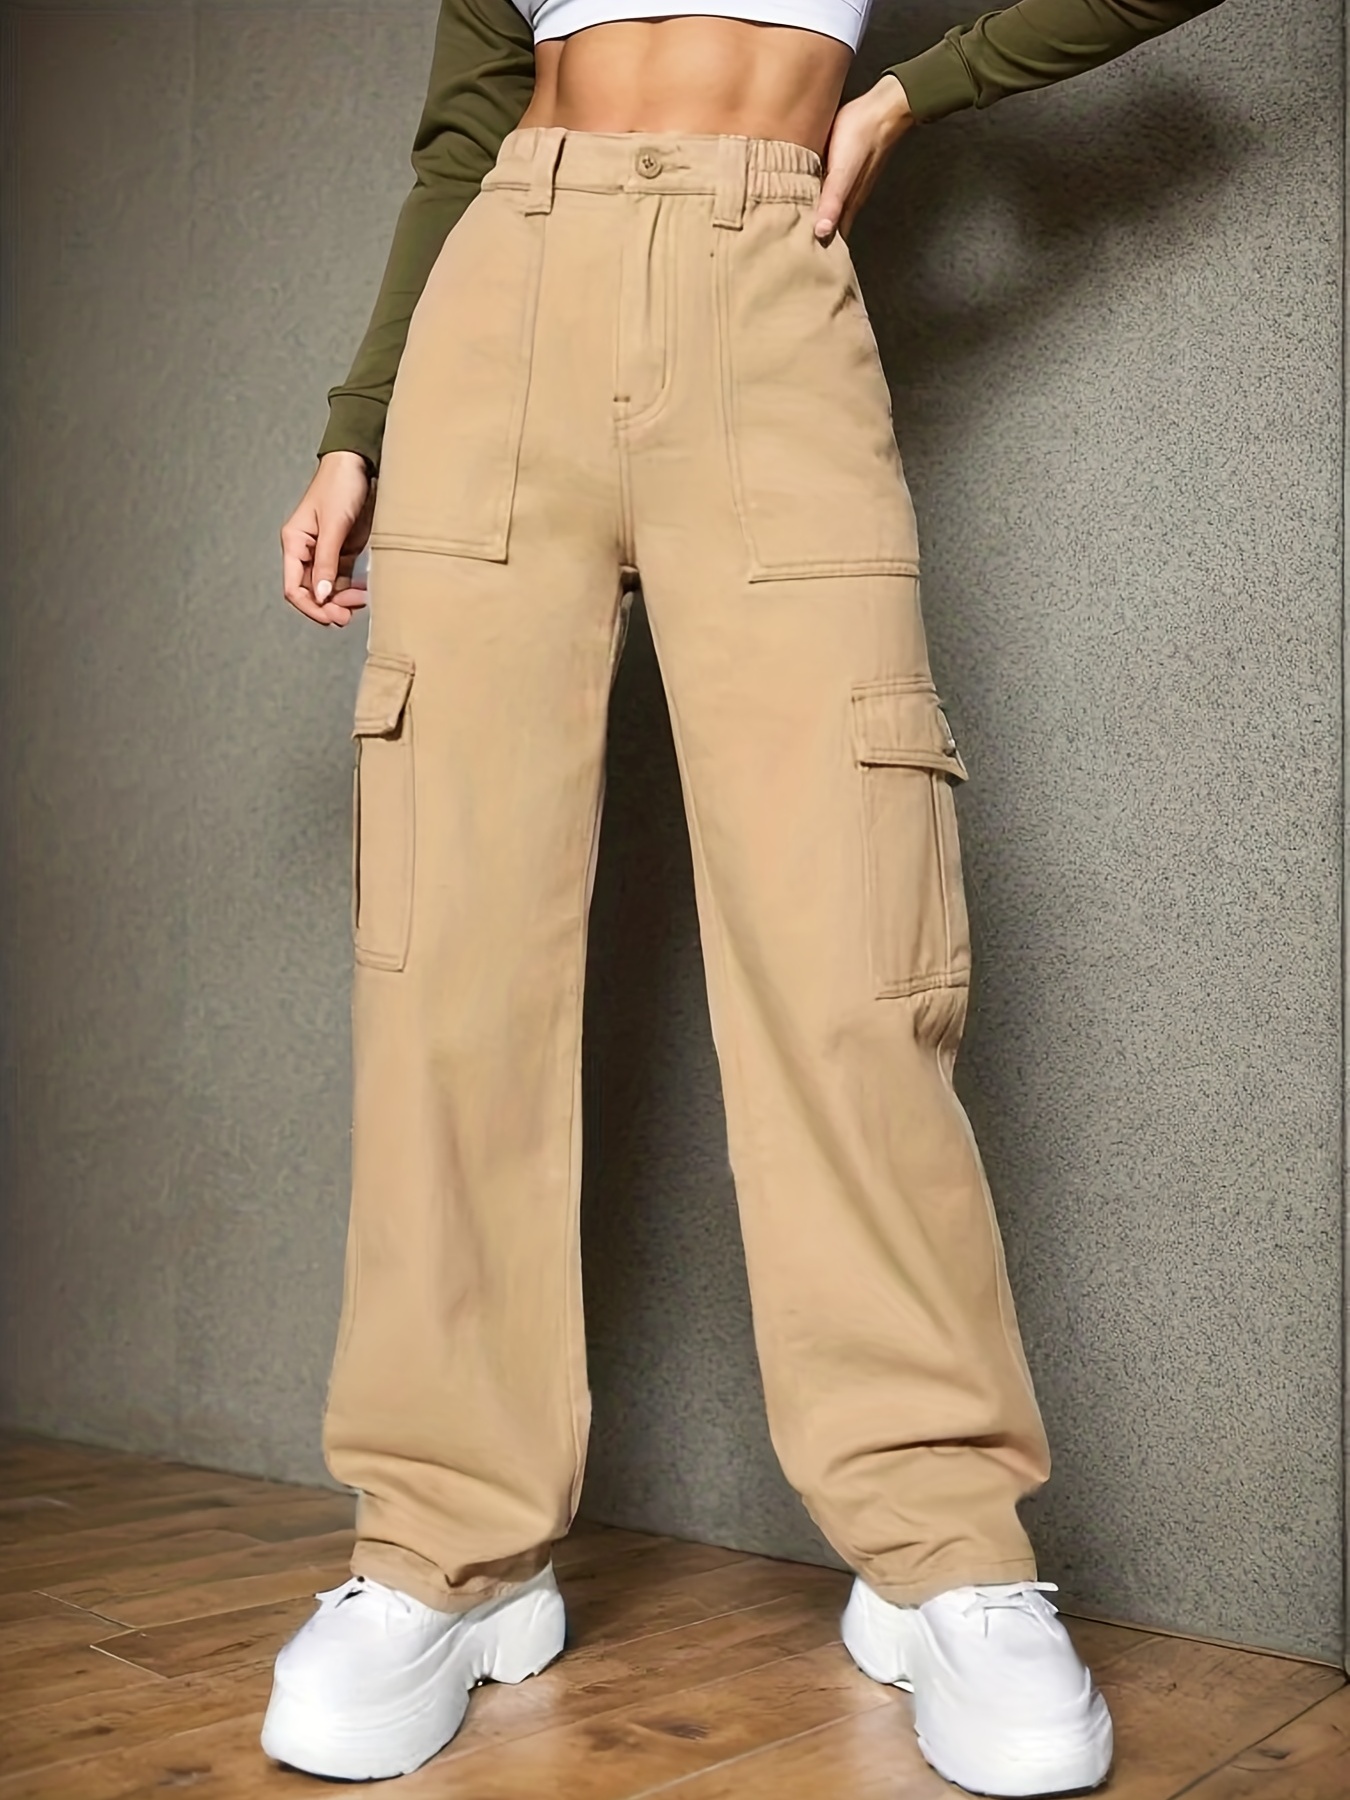 Jeans for Women Pants for Women Women's Jeans High Waist Flap Pocket Side  Cargo Jeans Women's Pants (Color : Beige, Size : Medium) : :  Clothing, Shoes & Accessories